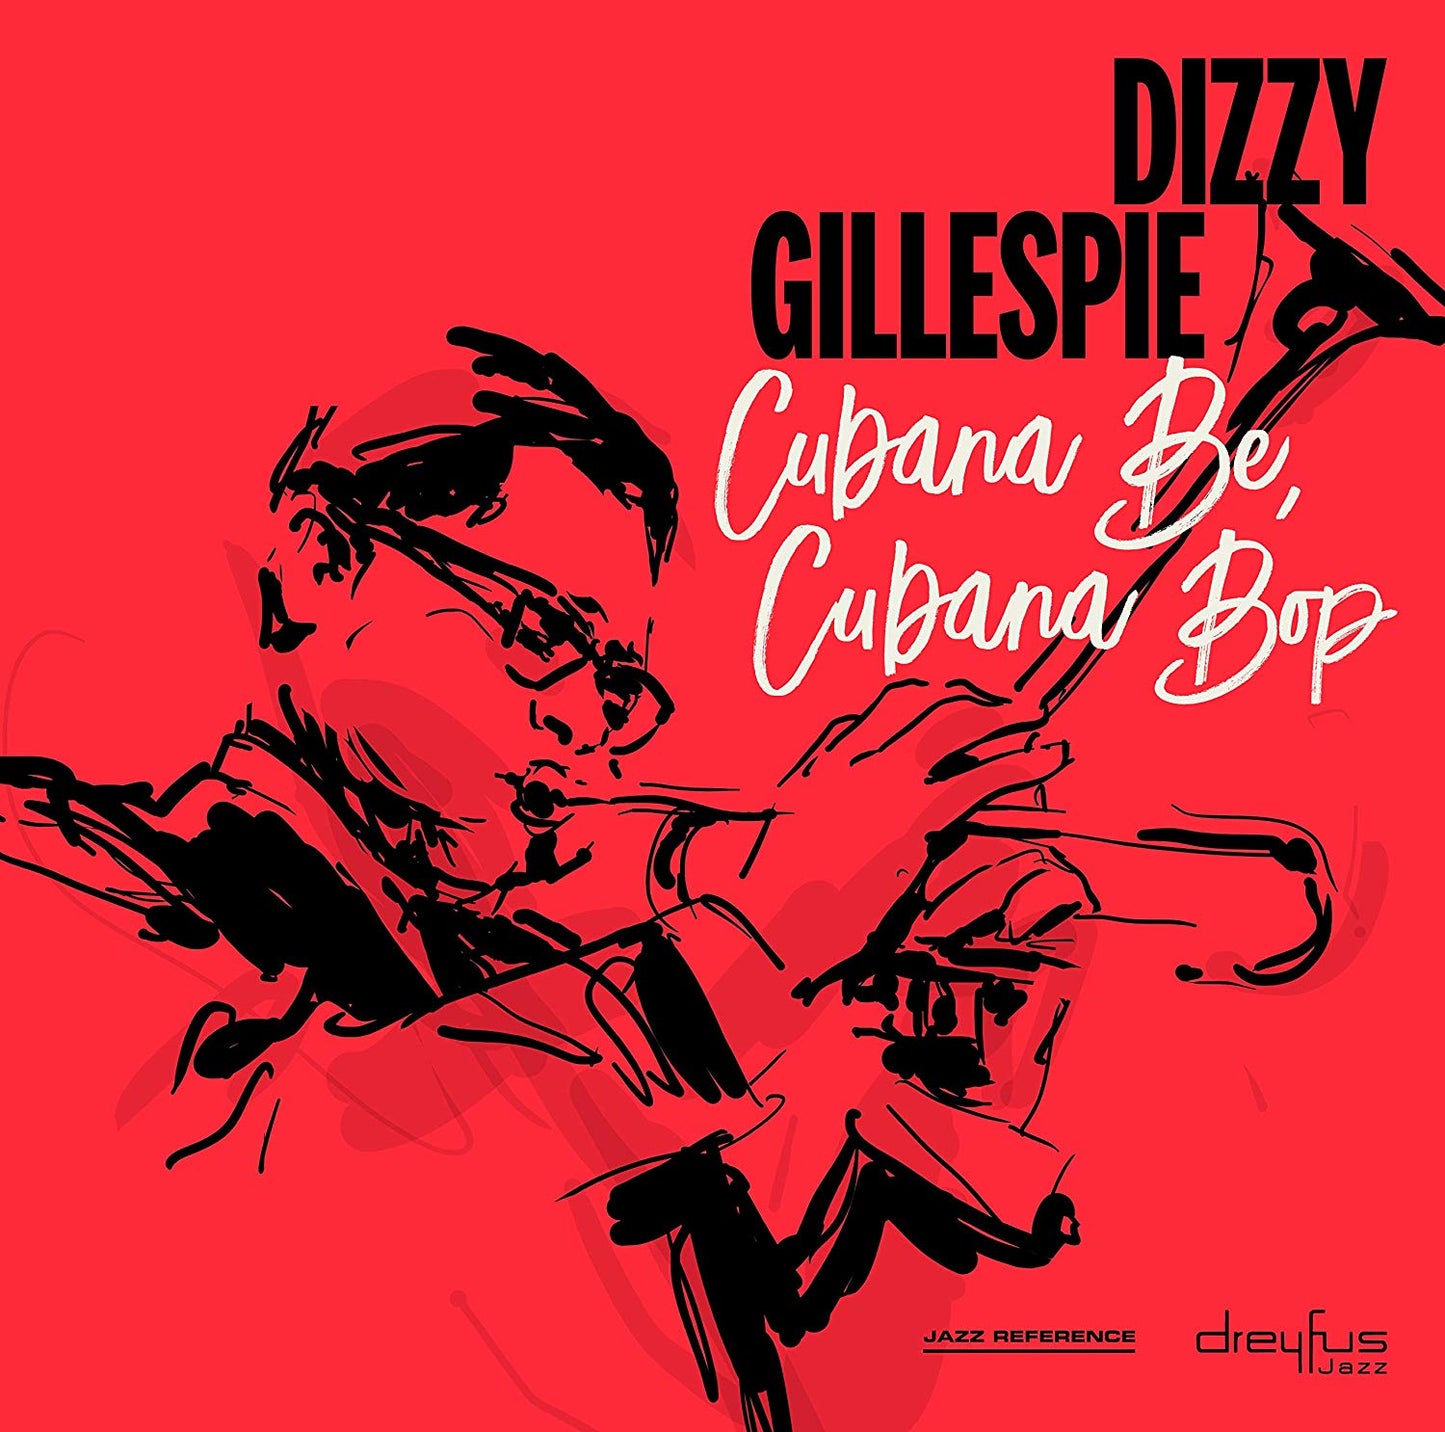 Gillespie, Dizzy - Cubana Be, Cubana Bop